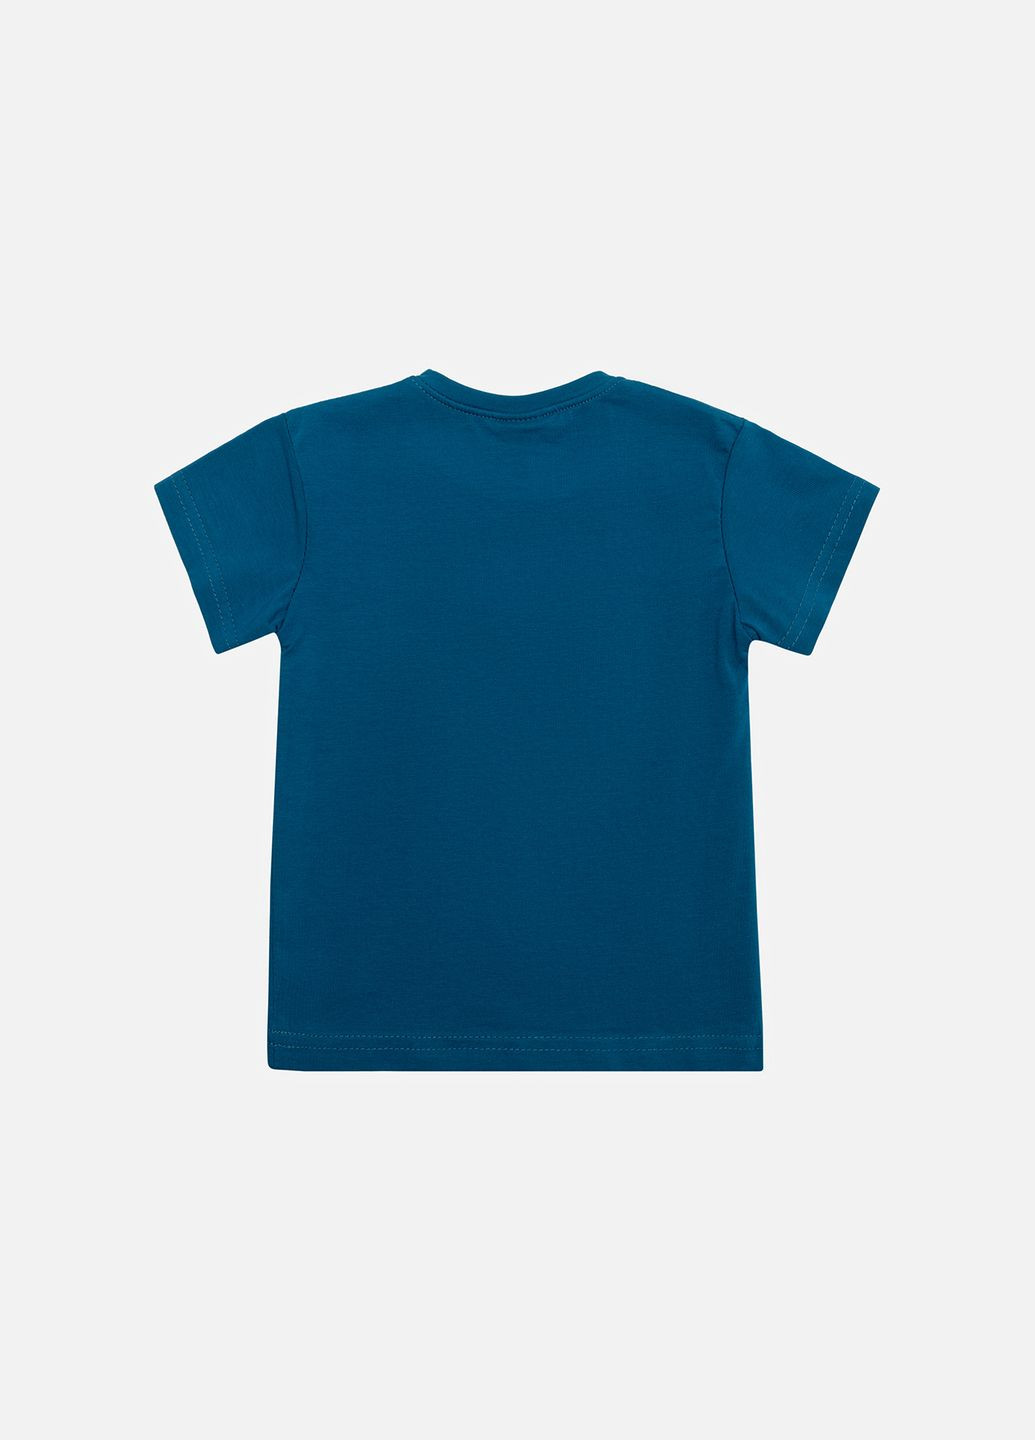 Синяя летняя футболка для мальчика цвет синий цб-00223115 Galilatex